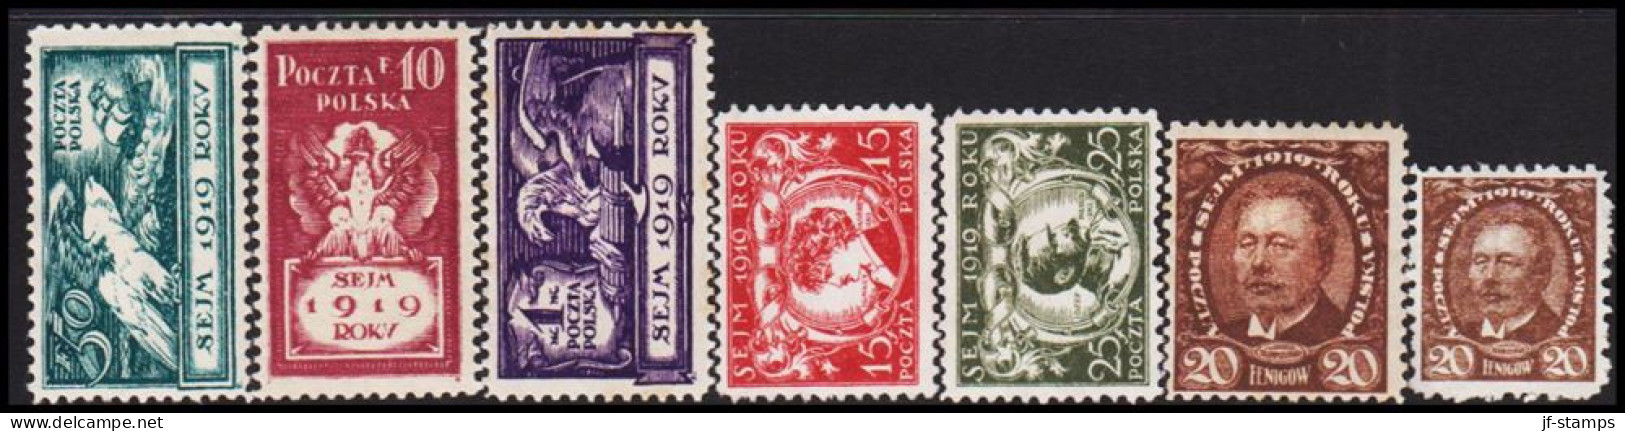 1919. POLSKA. Parliament Sejm In Complete Set Hinged.  (Michel 123-129) - JF545891 - Unused Stamps